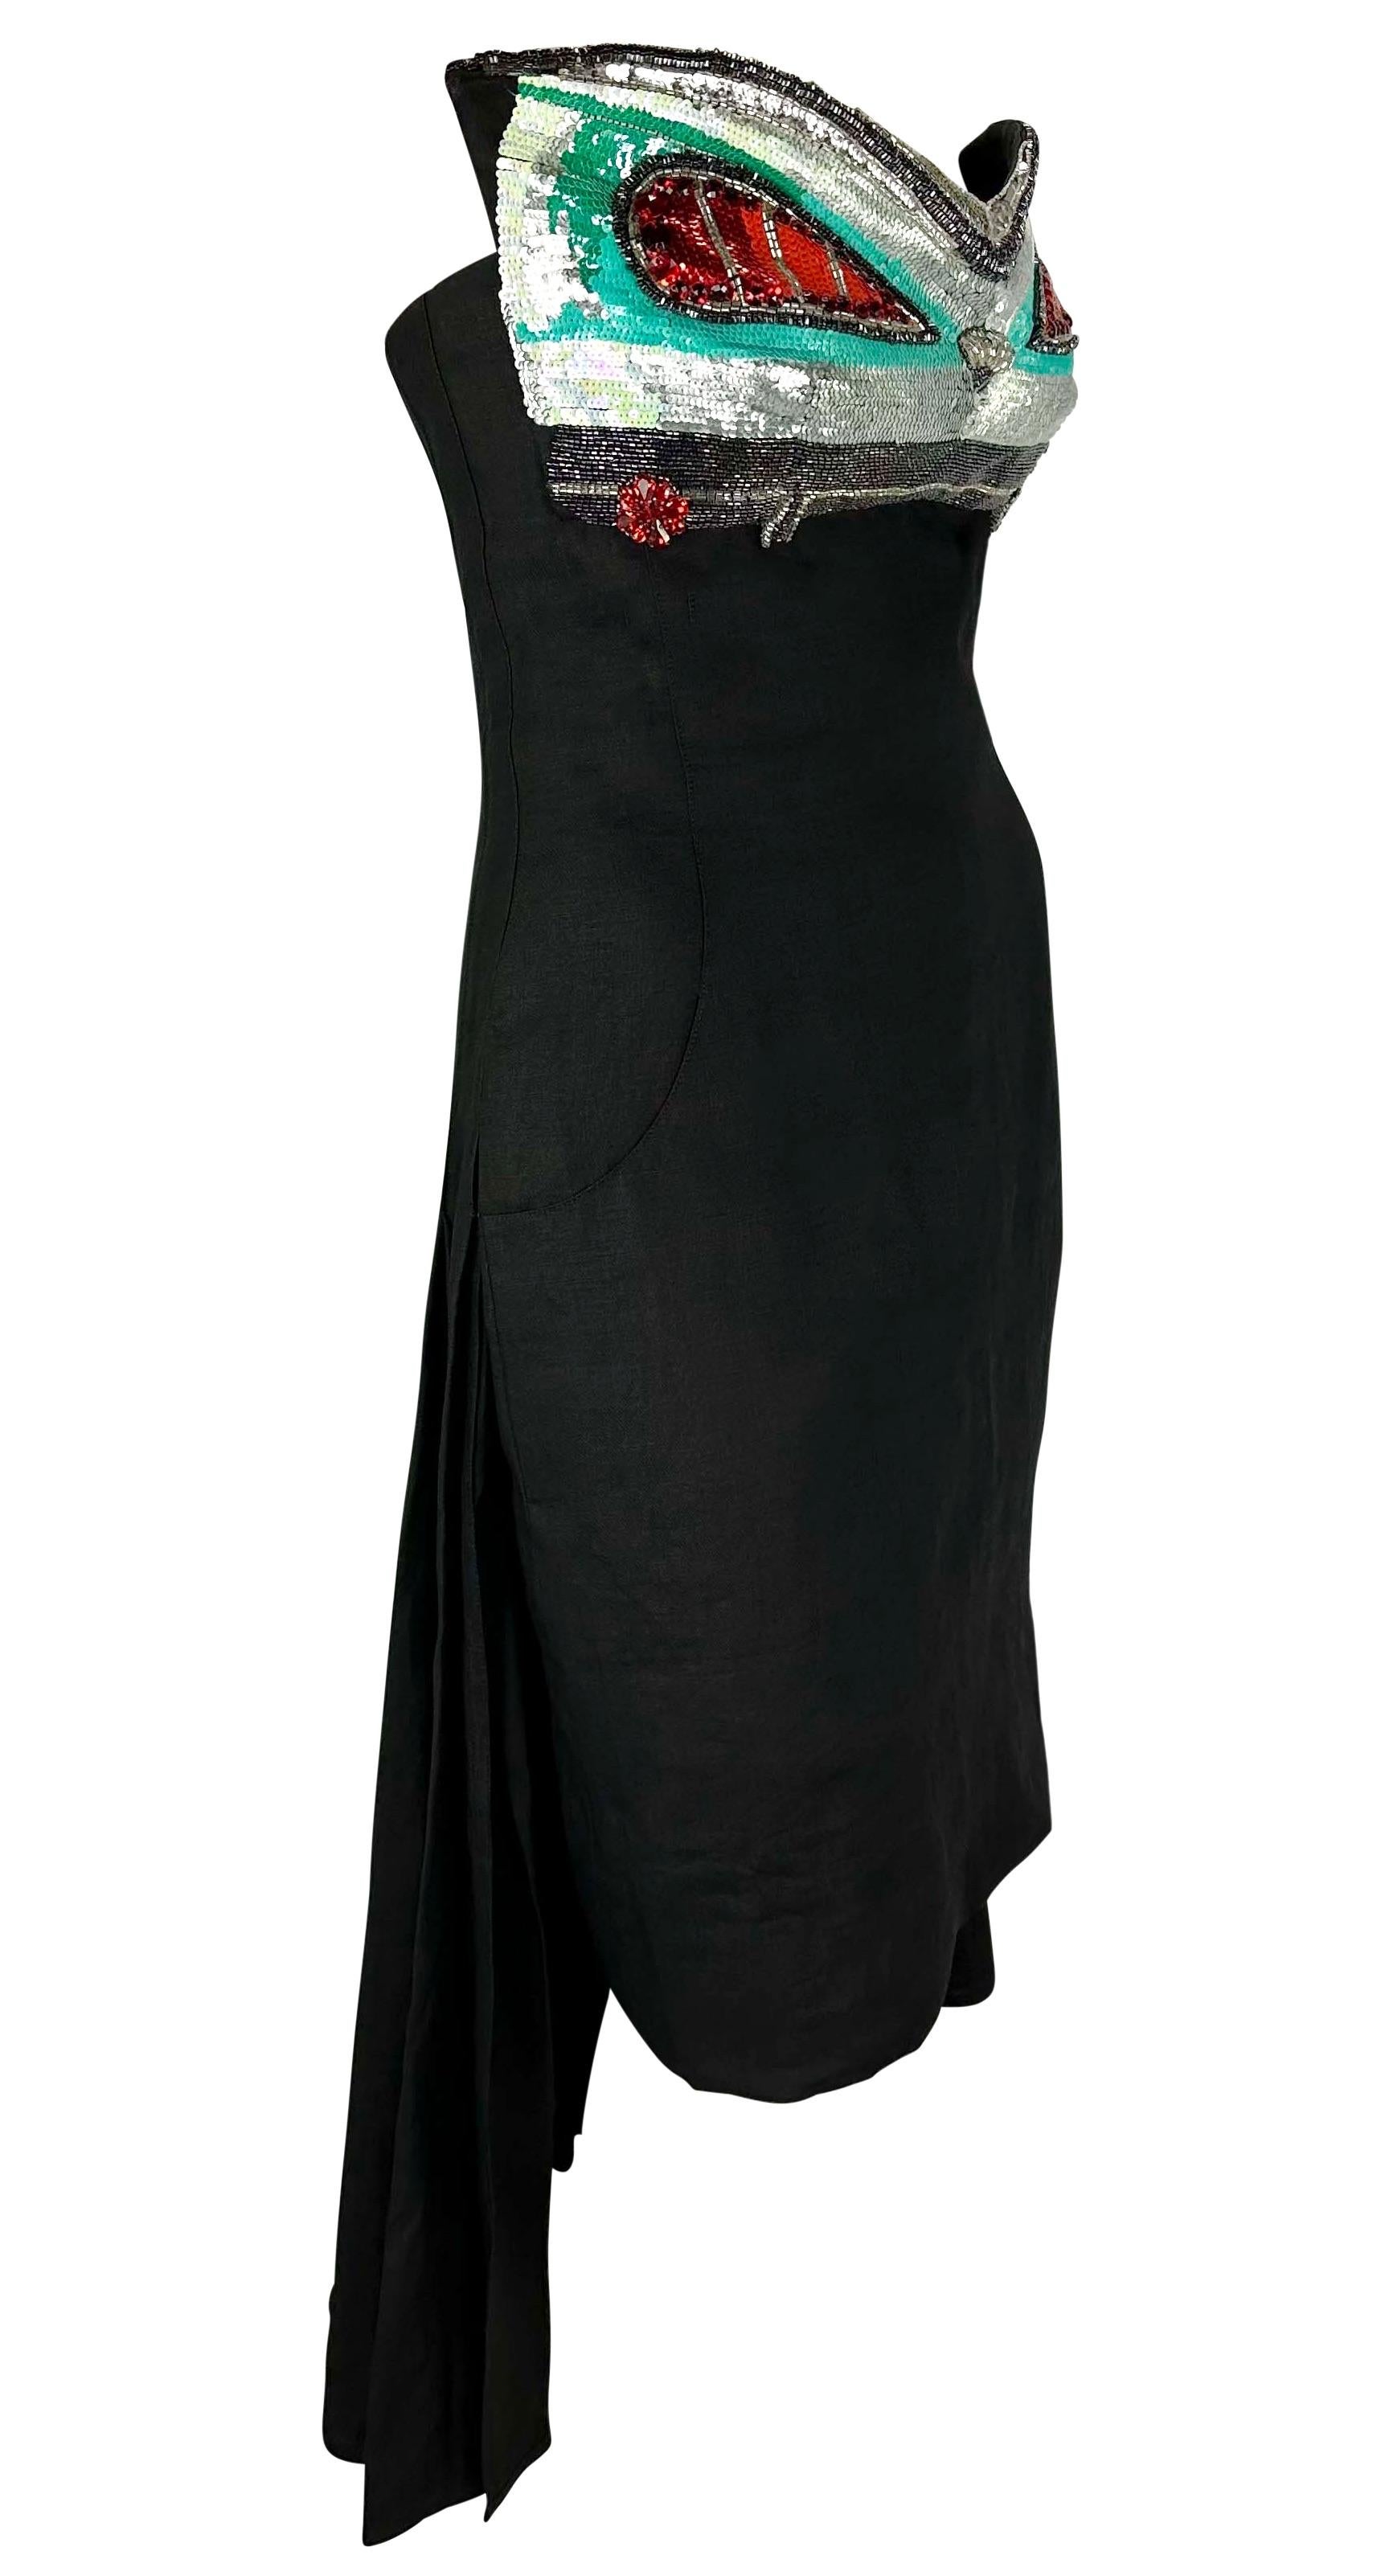 S/S 1987 Karl Lagerfeld Runway  Taillight Rhinestone Sequin Black Dress For Sale 5